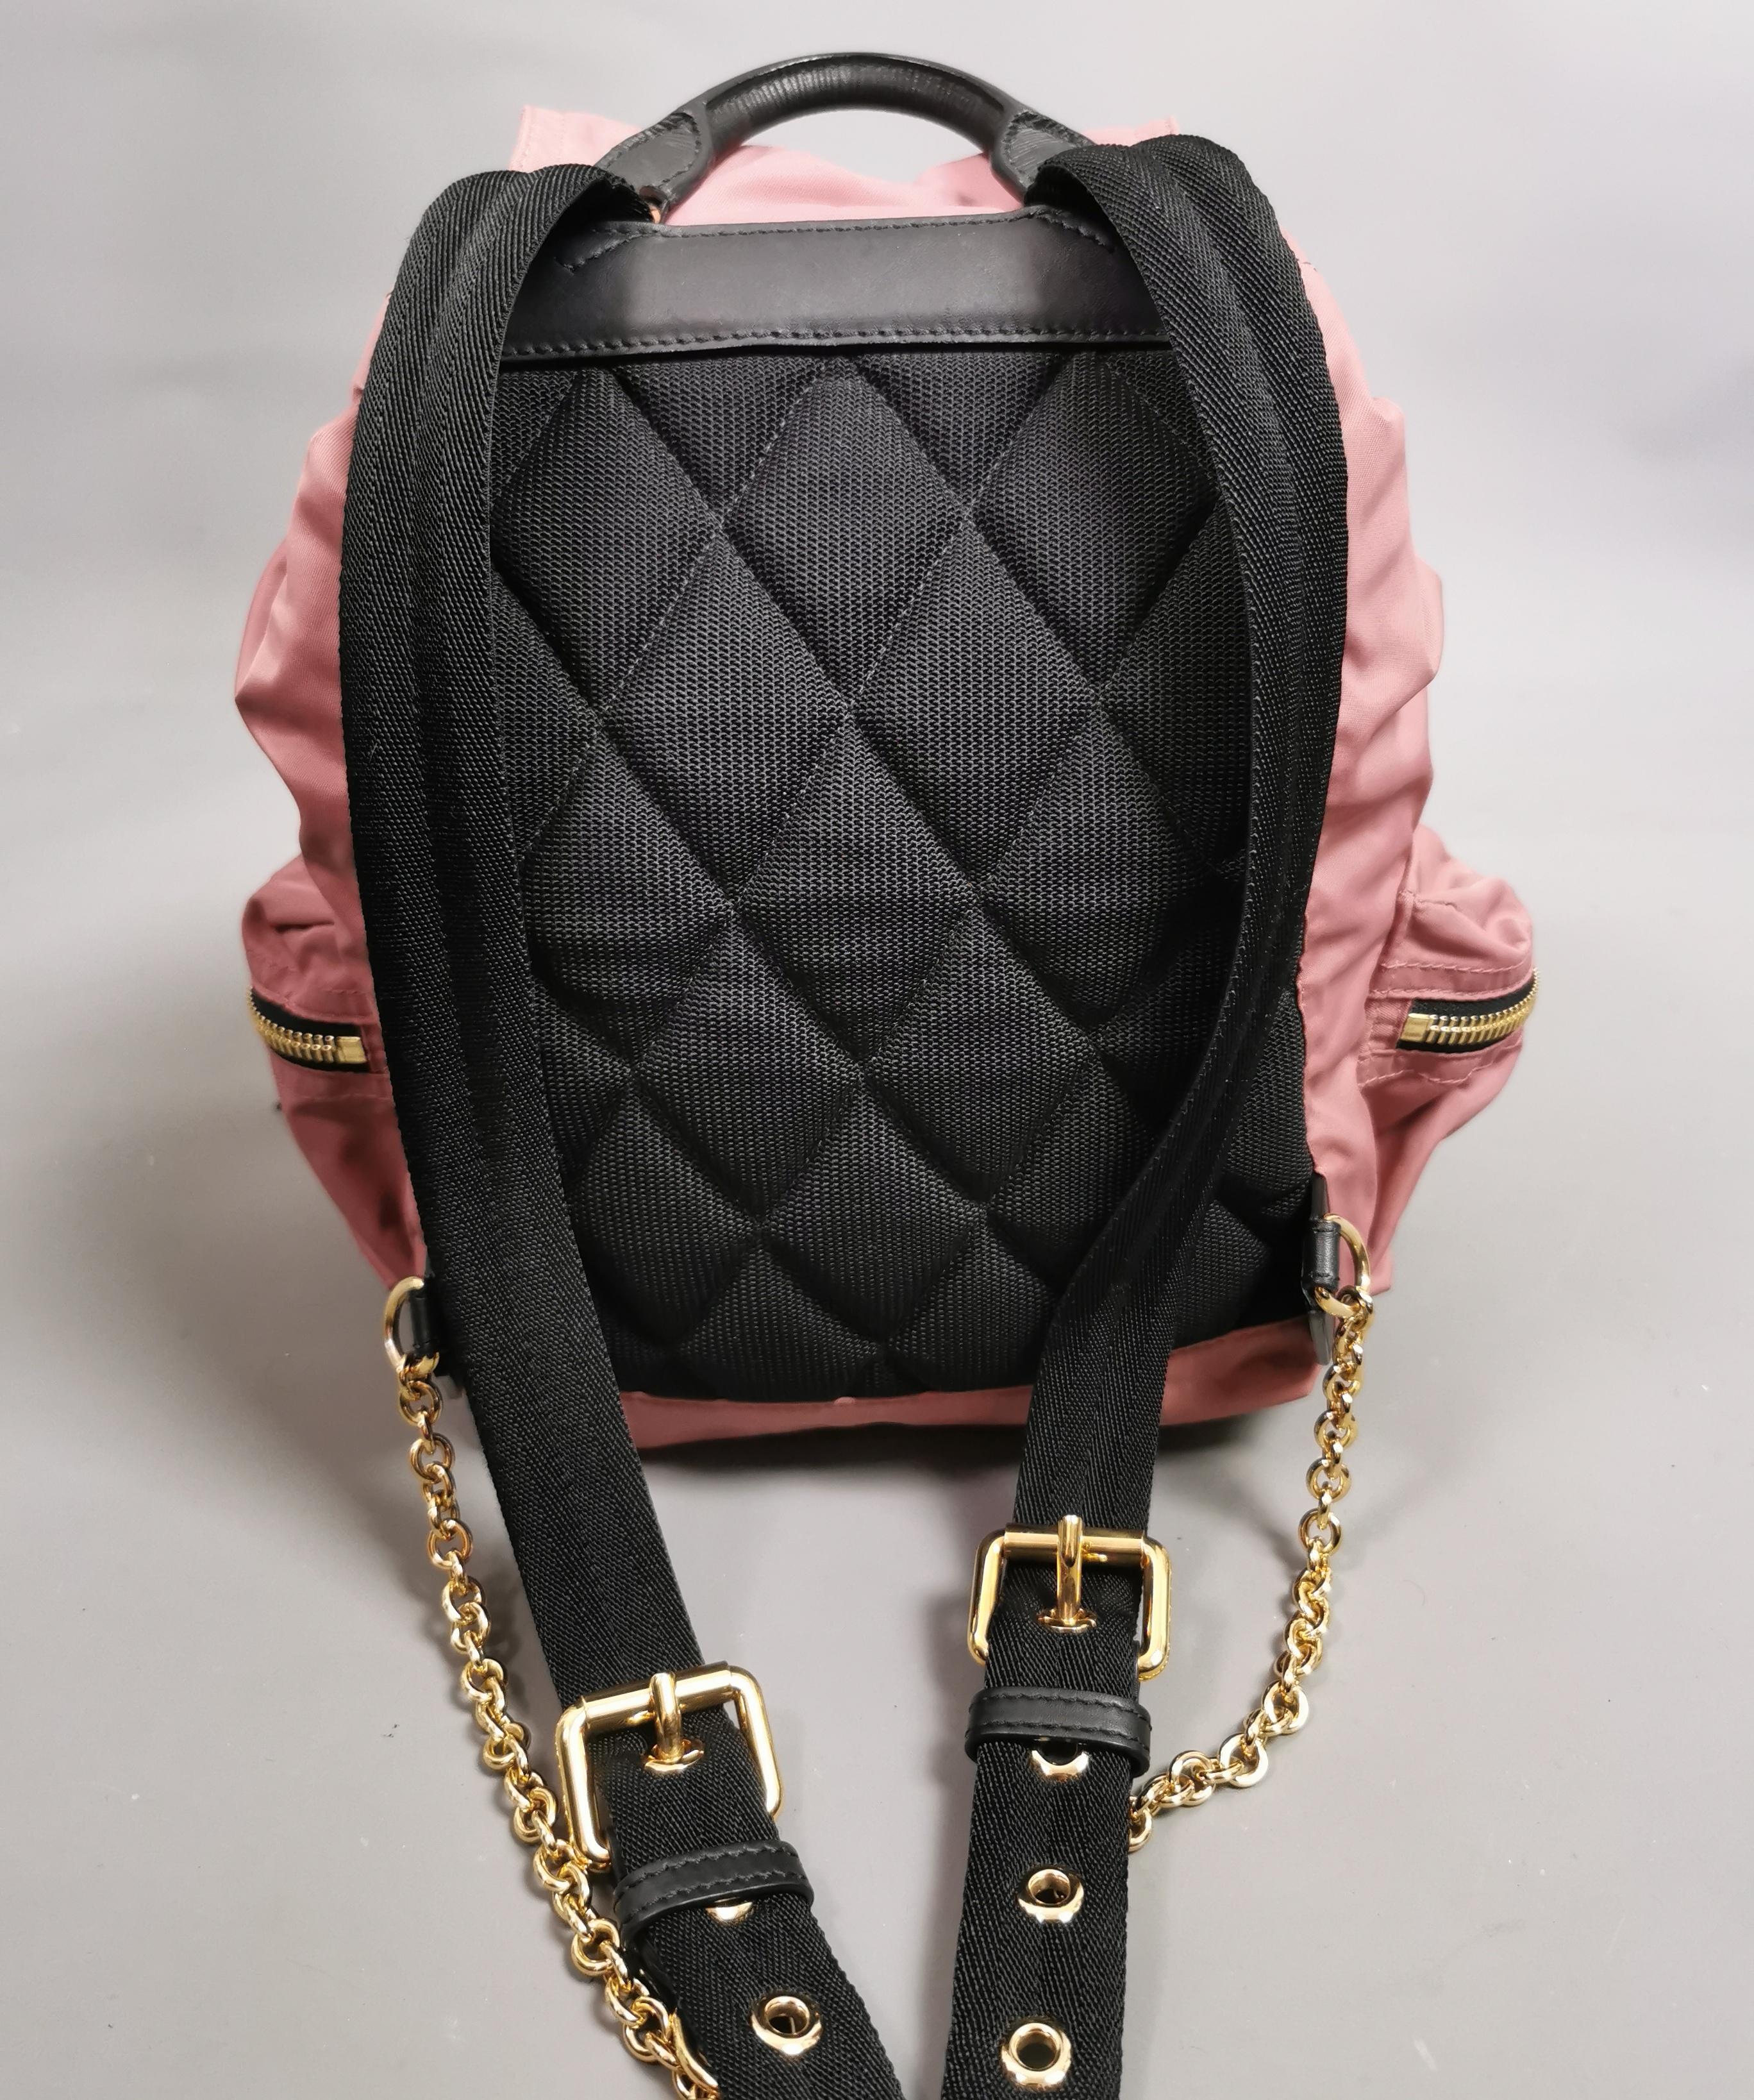 Burberry The Rucksack, pink nylon backpack, gold tone hardware  6